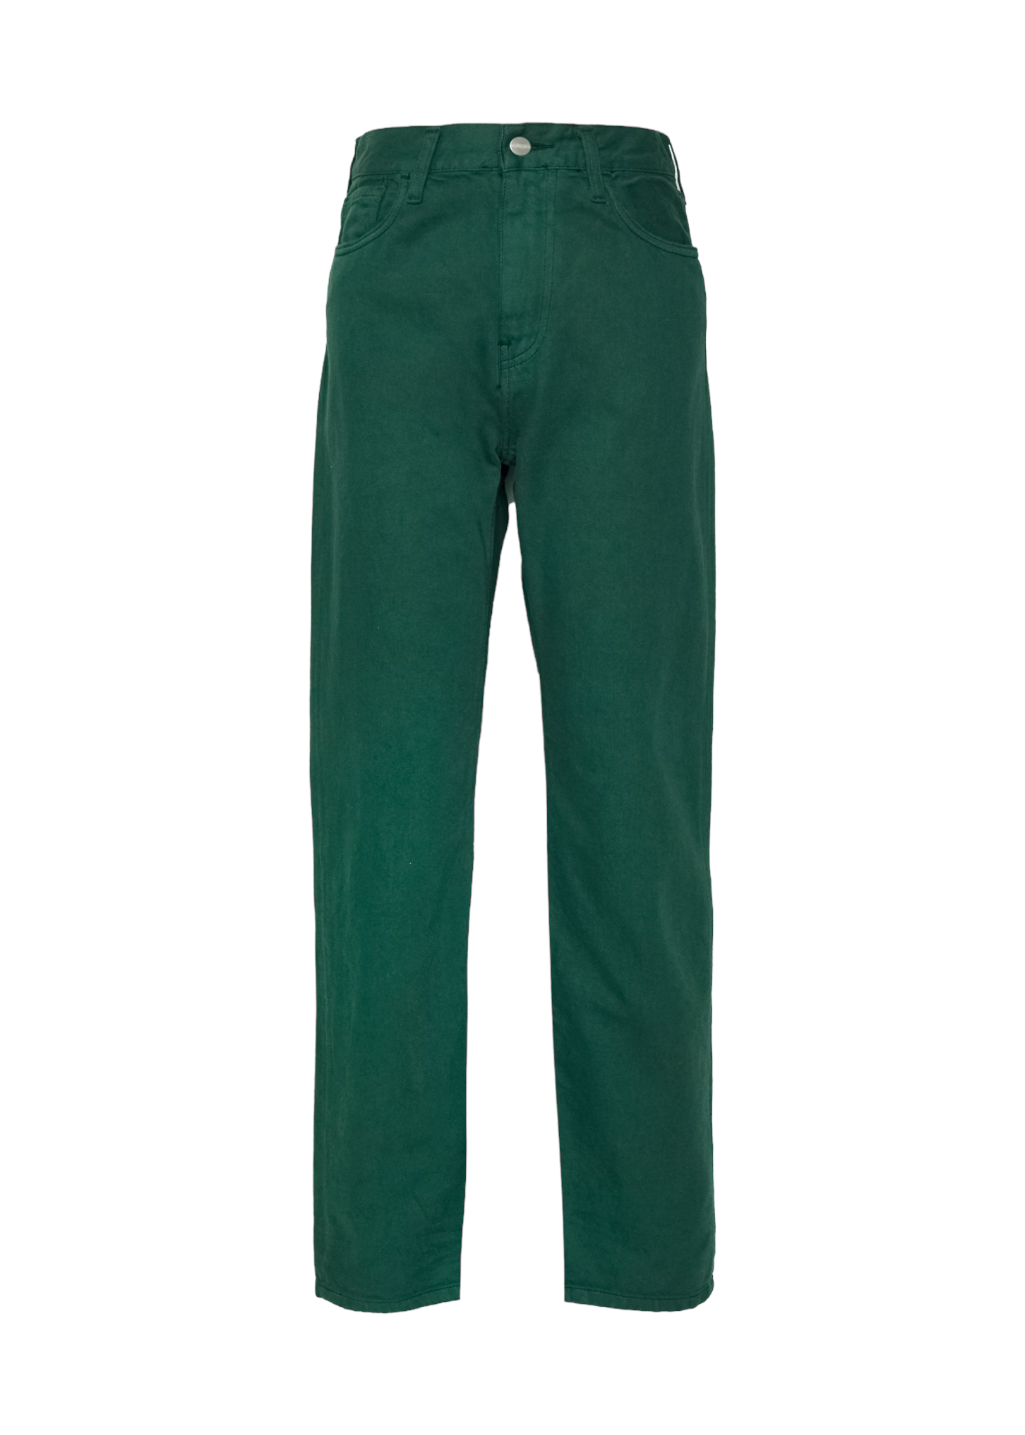 Carhartt WIP Collins Pant Hemlock Green - Womenswear